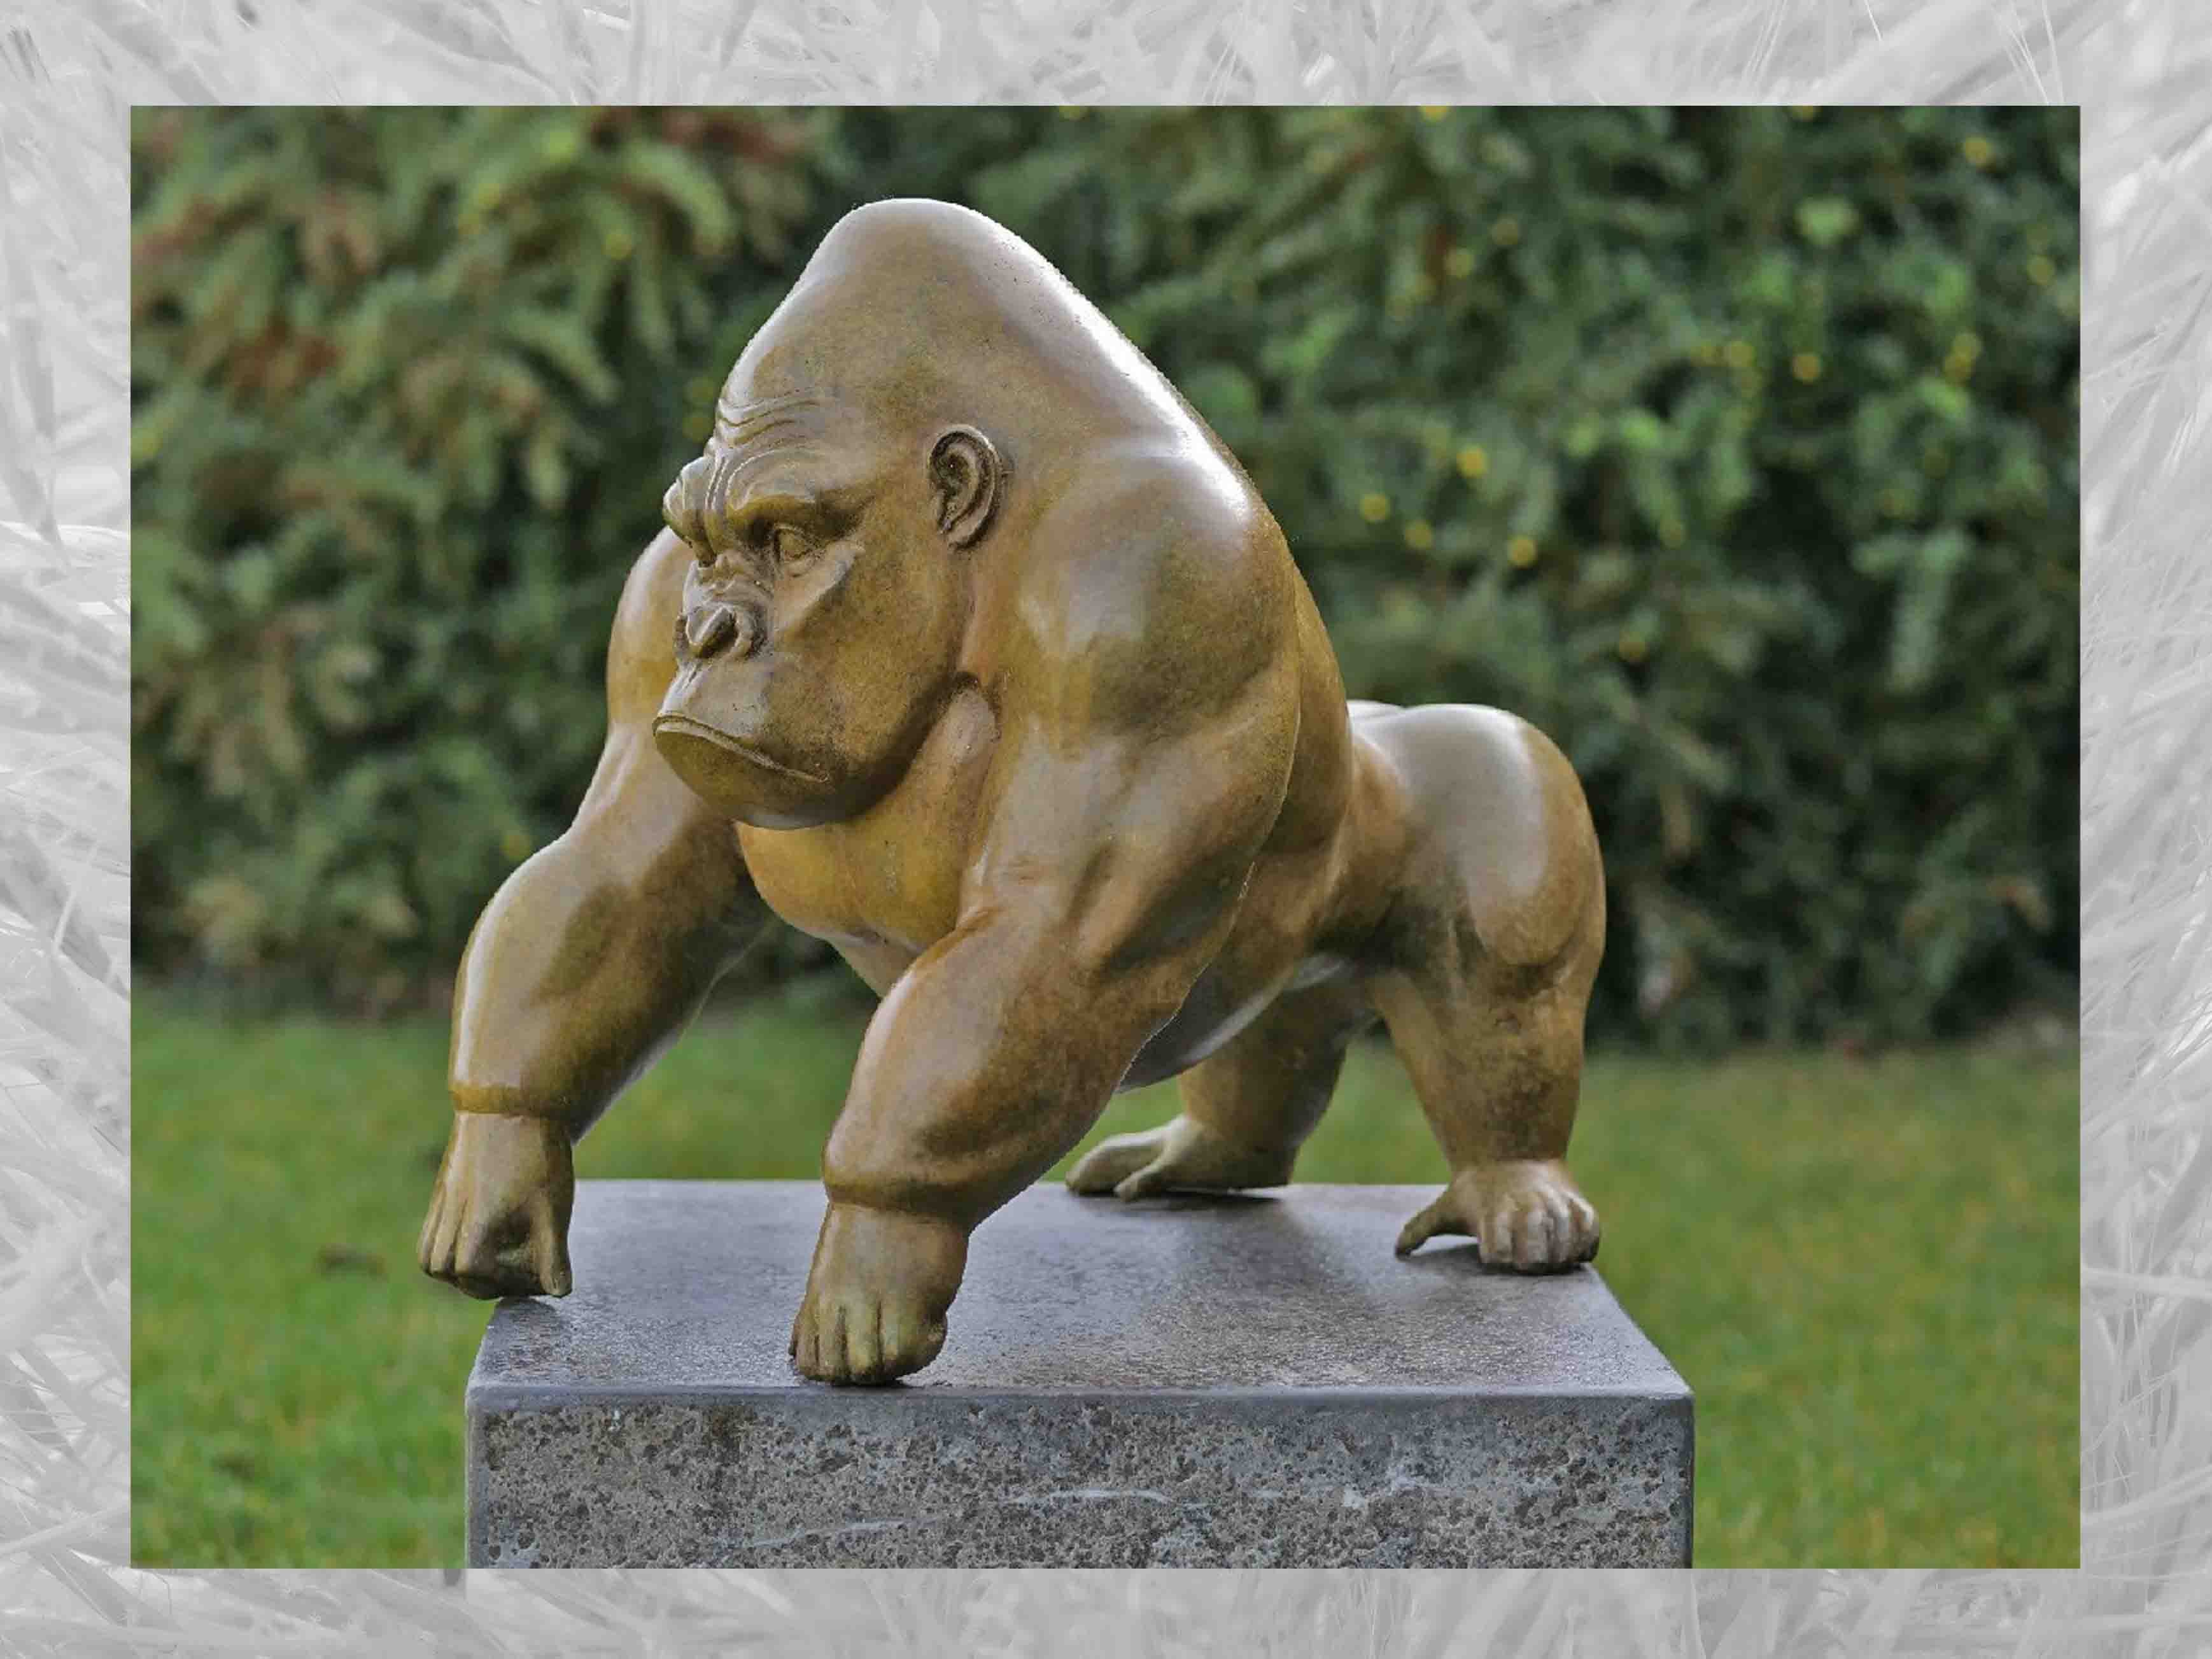 IDYL Gartenfigur IDYL Bronze-Skulptur Gorilla grüne heiße Patina, Bronze